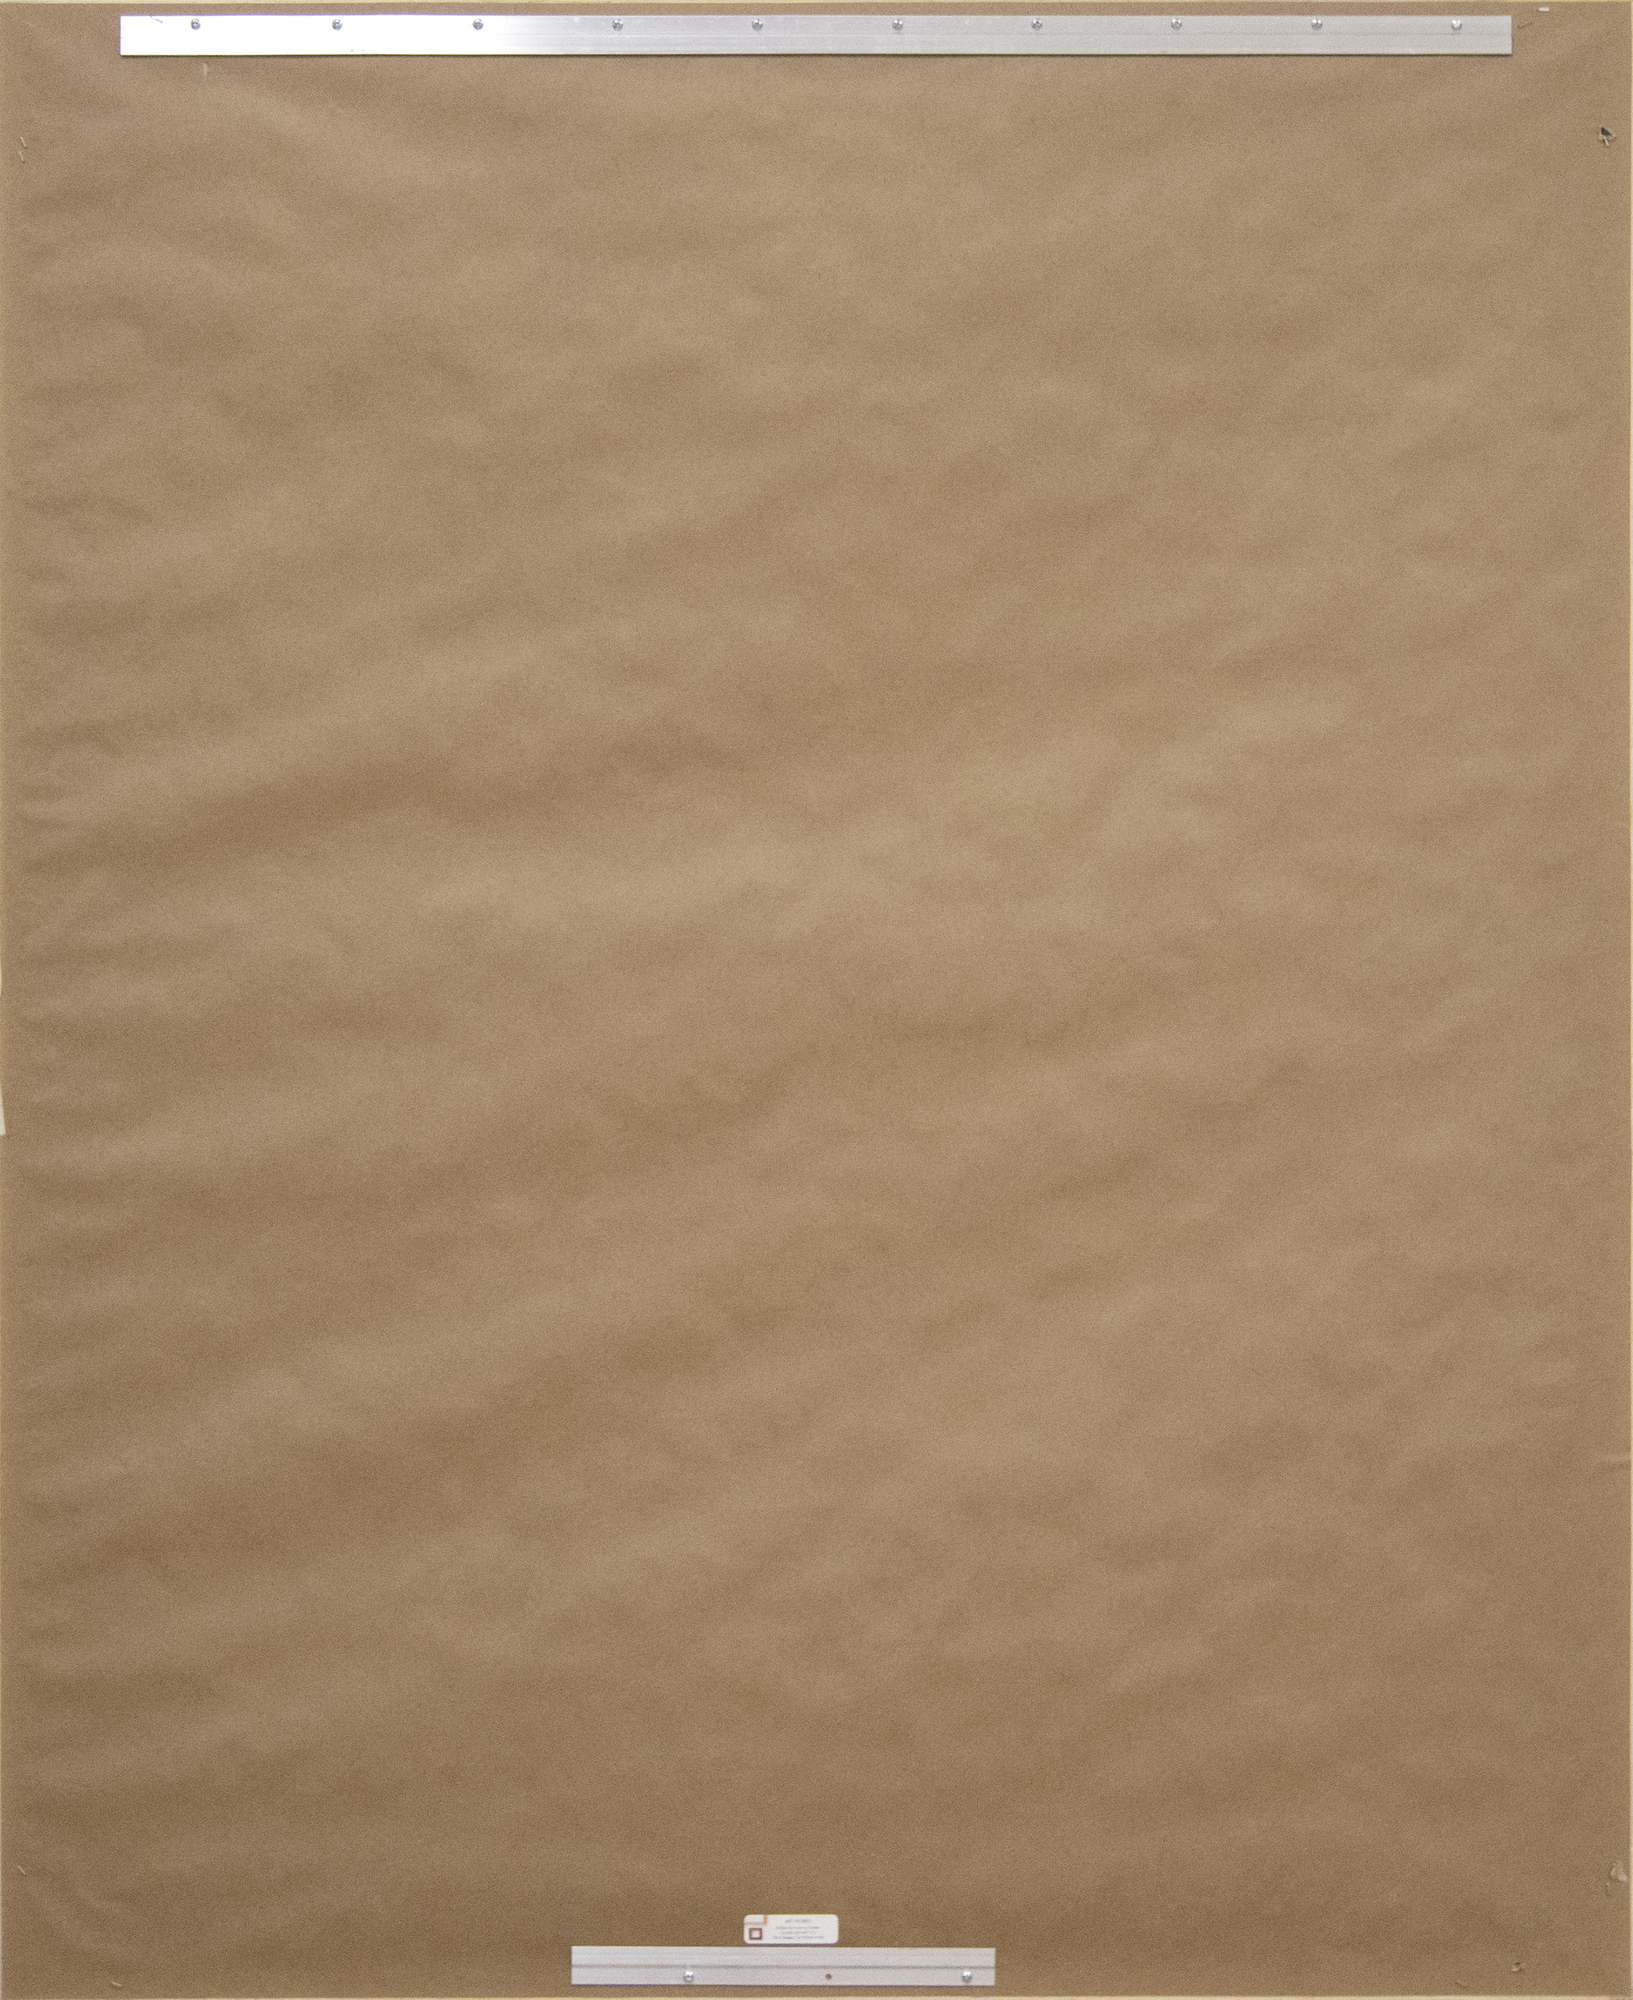 JAE KON PARK - Sin título - óleo sobre tela - 45 3/4 x 35 1/2 in.